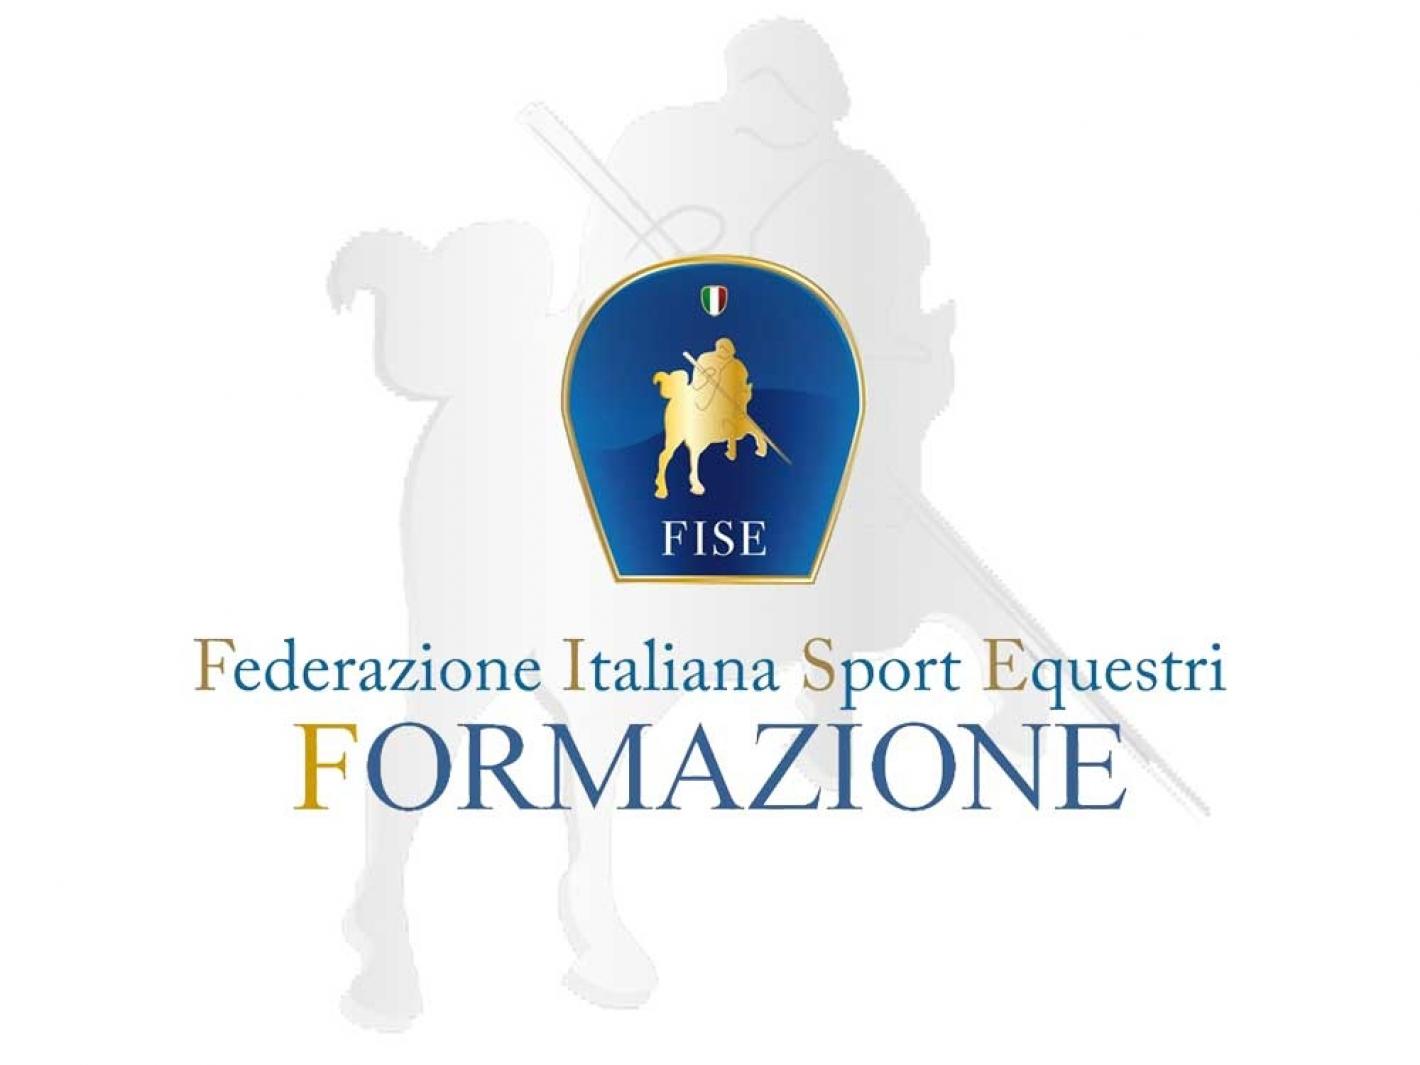 images/emiliaromagna/Formazione/medium/FORMAZIONE_2020.jpg